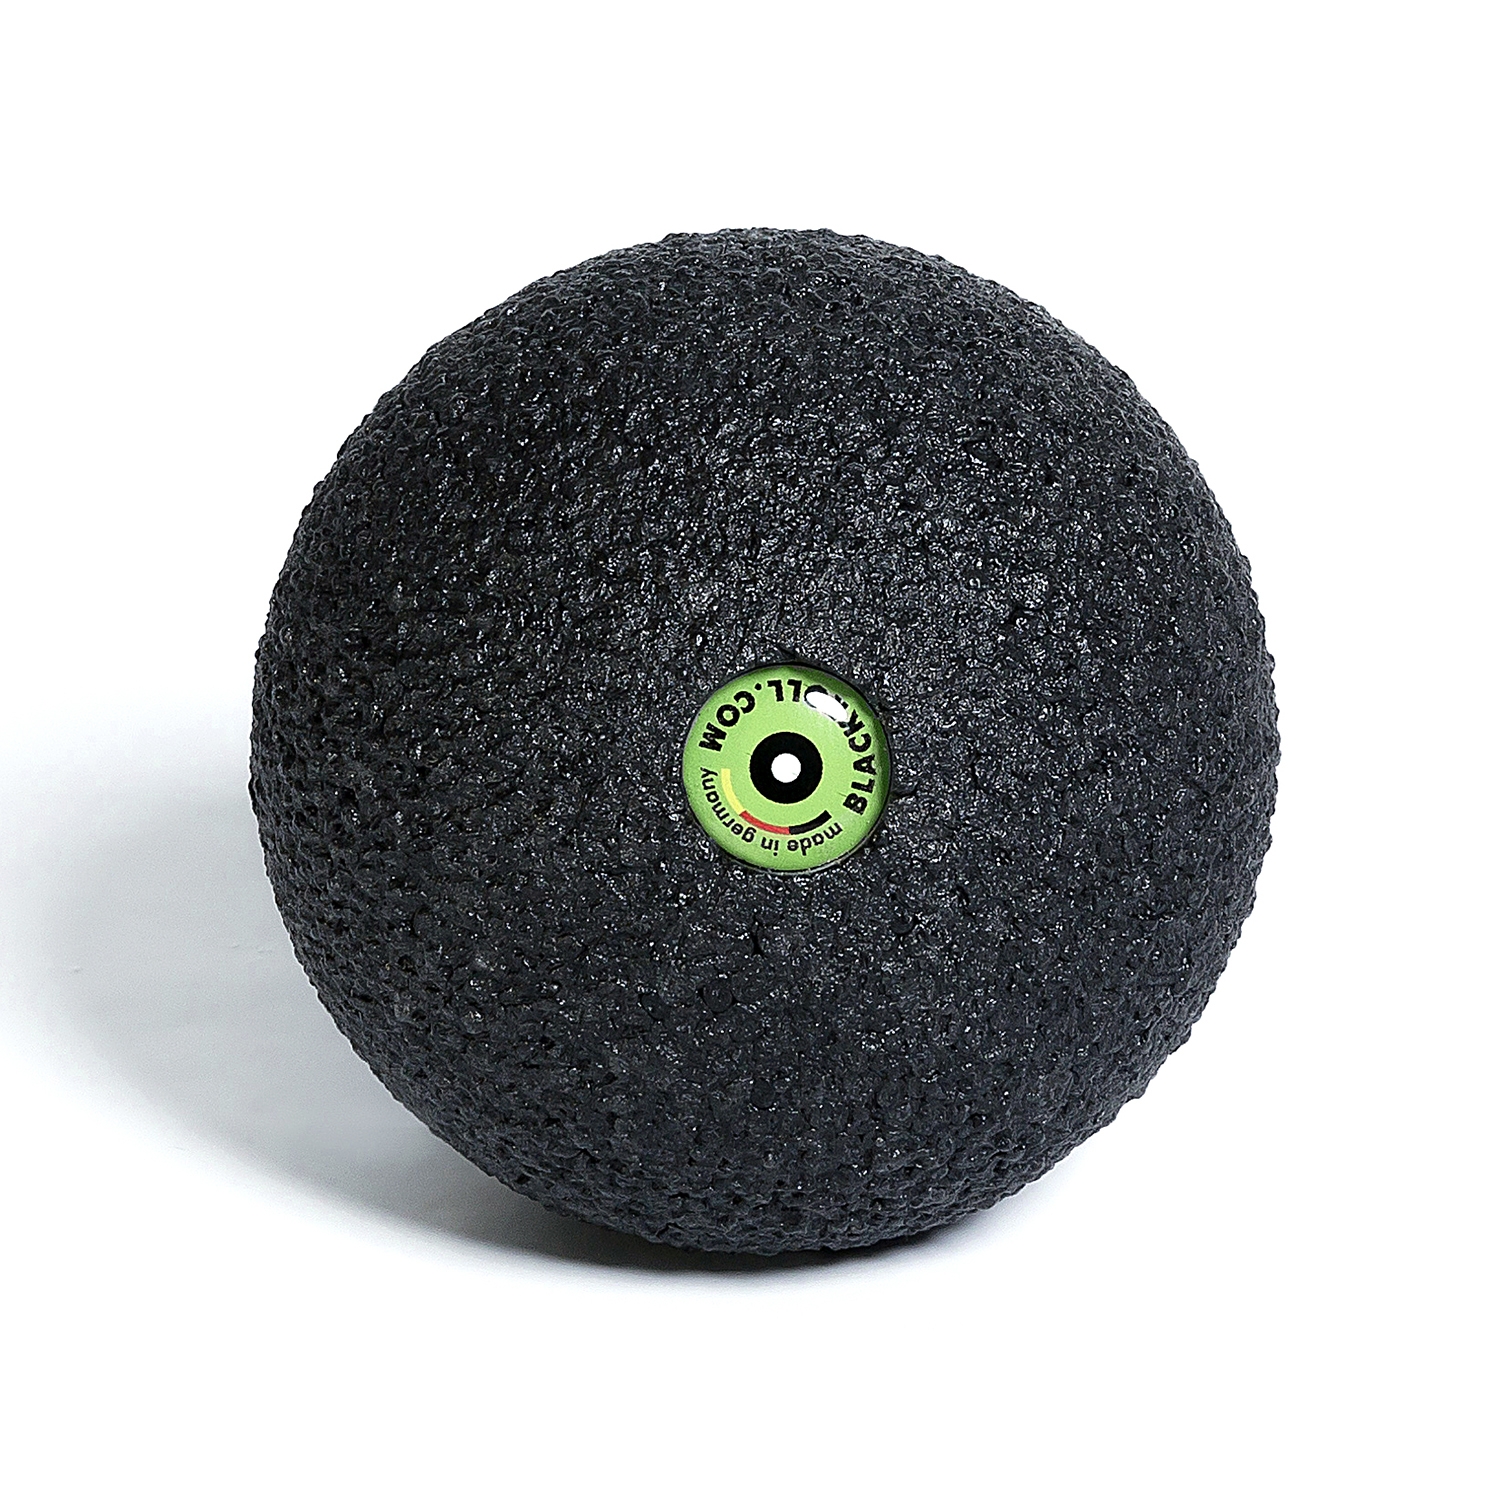 Alternatief voorstel Hollywood Geef energie Blackroll Ball massagebal - 8 cm - zwart - Lengte: 8 cm | Kleur: Zwart